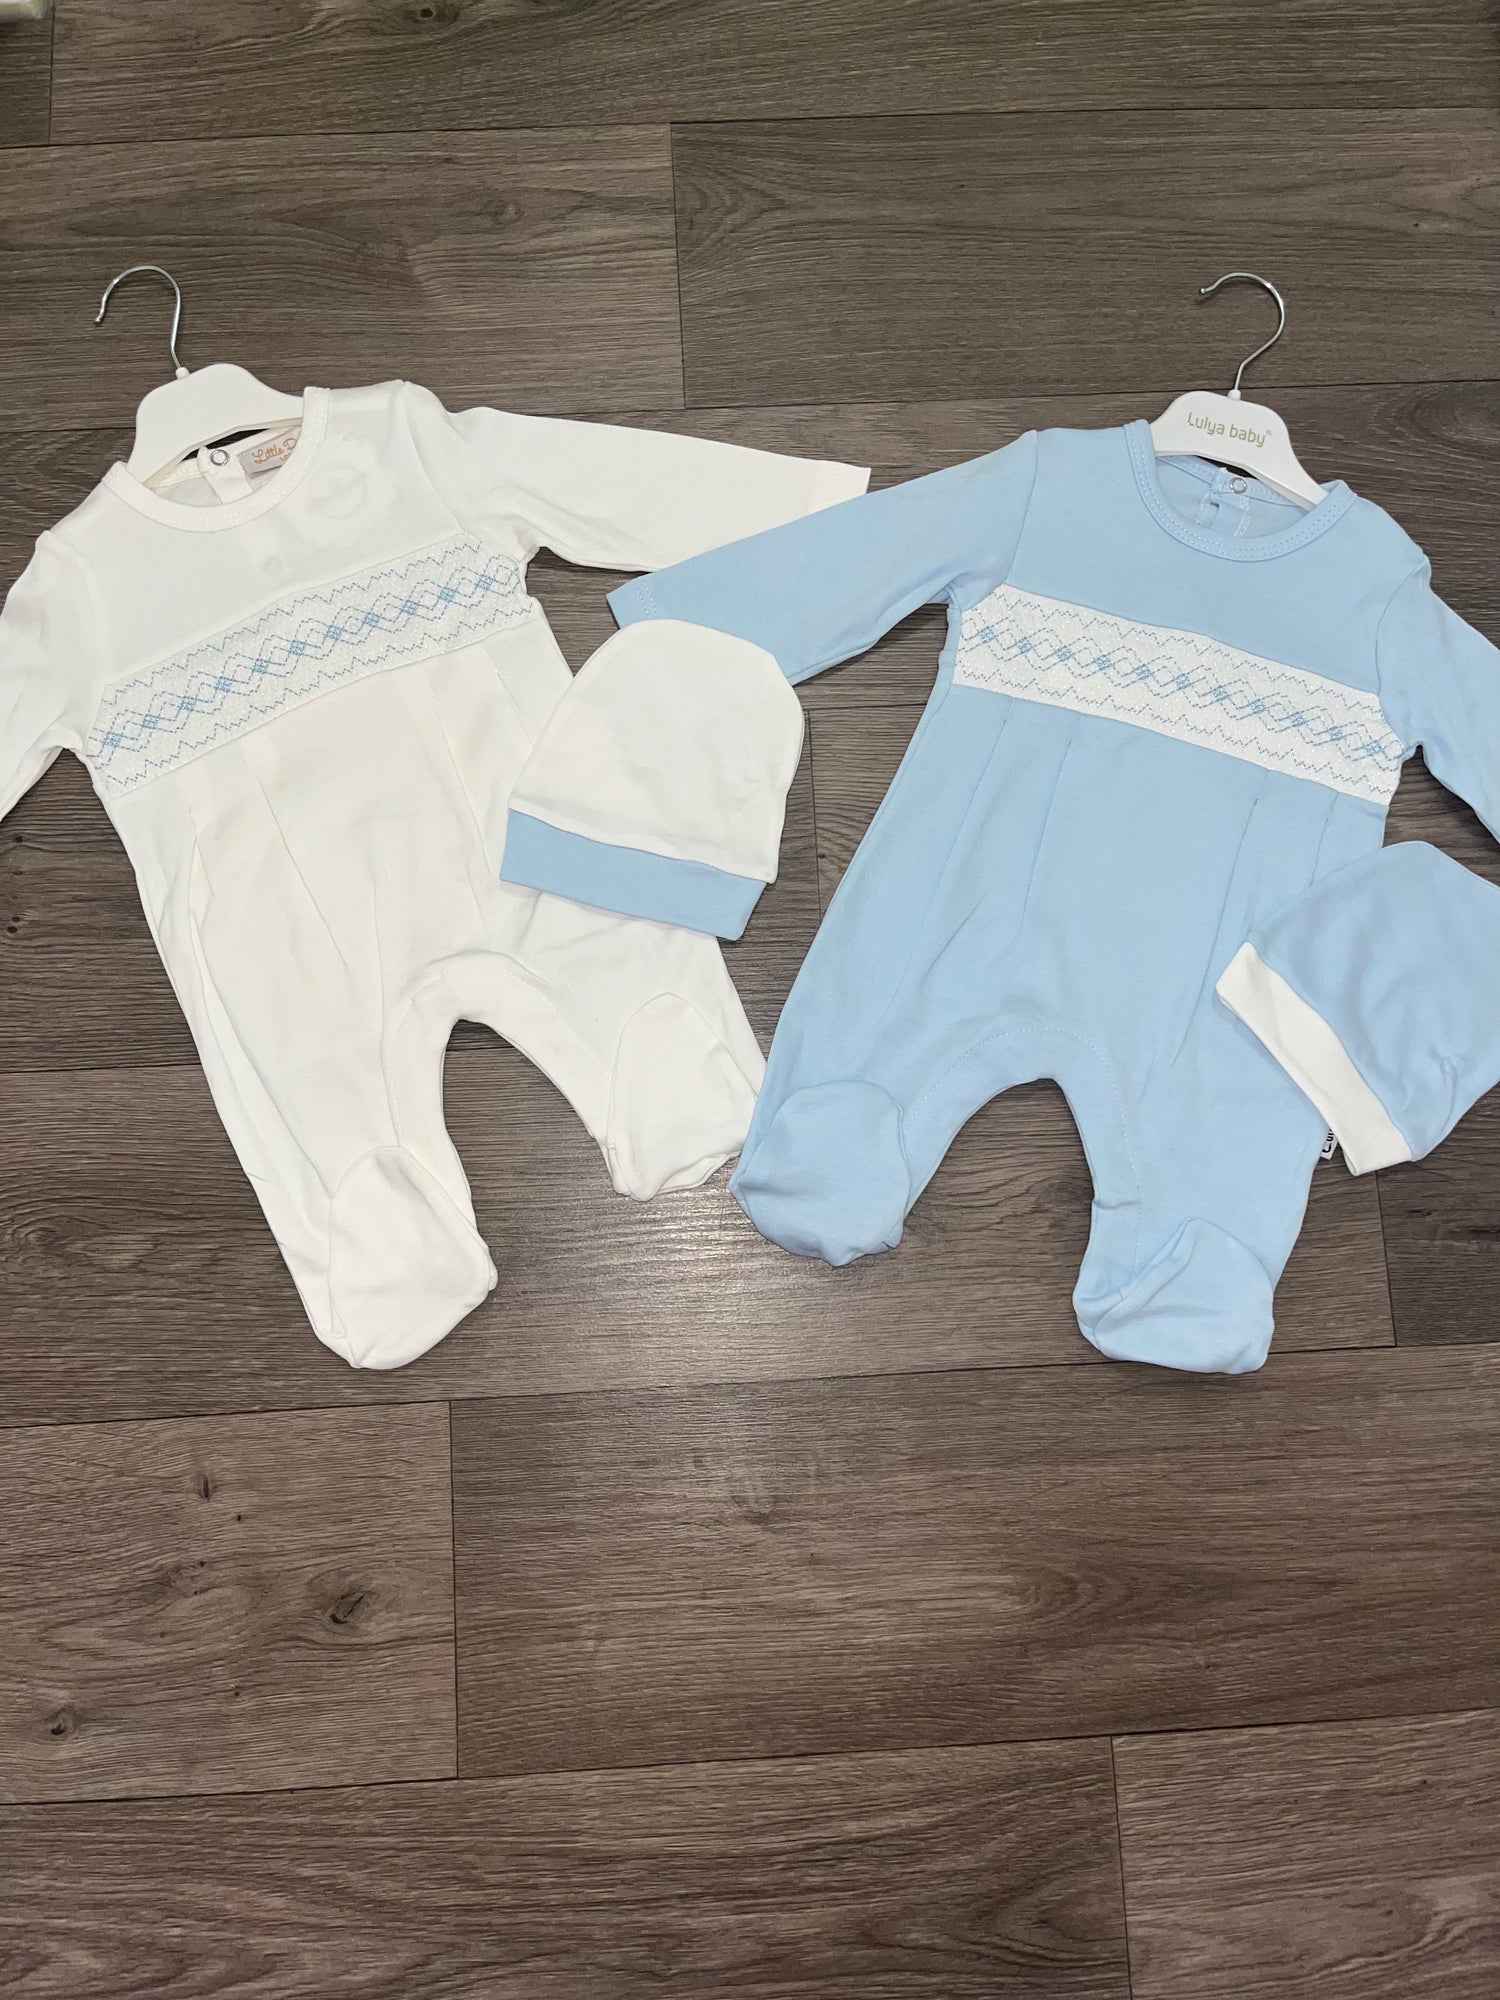 Baby/children’s clothing